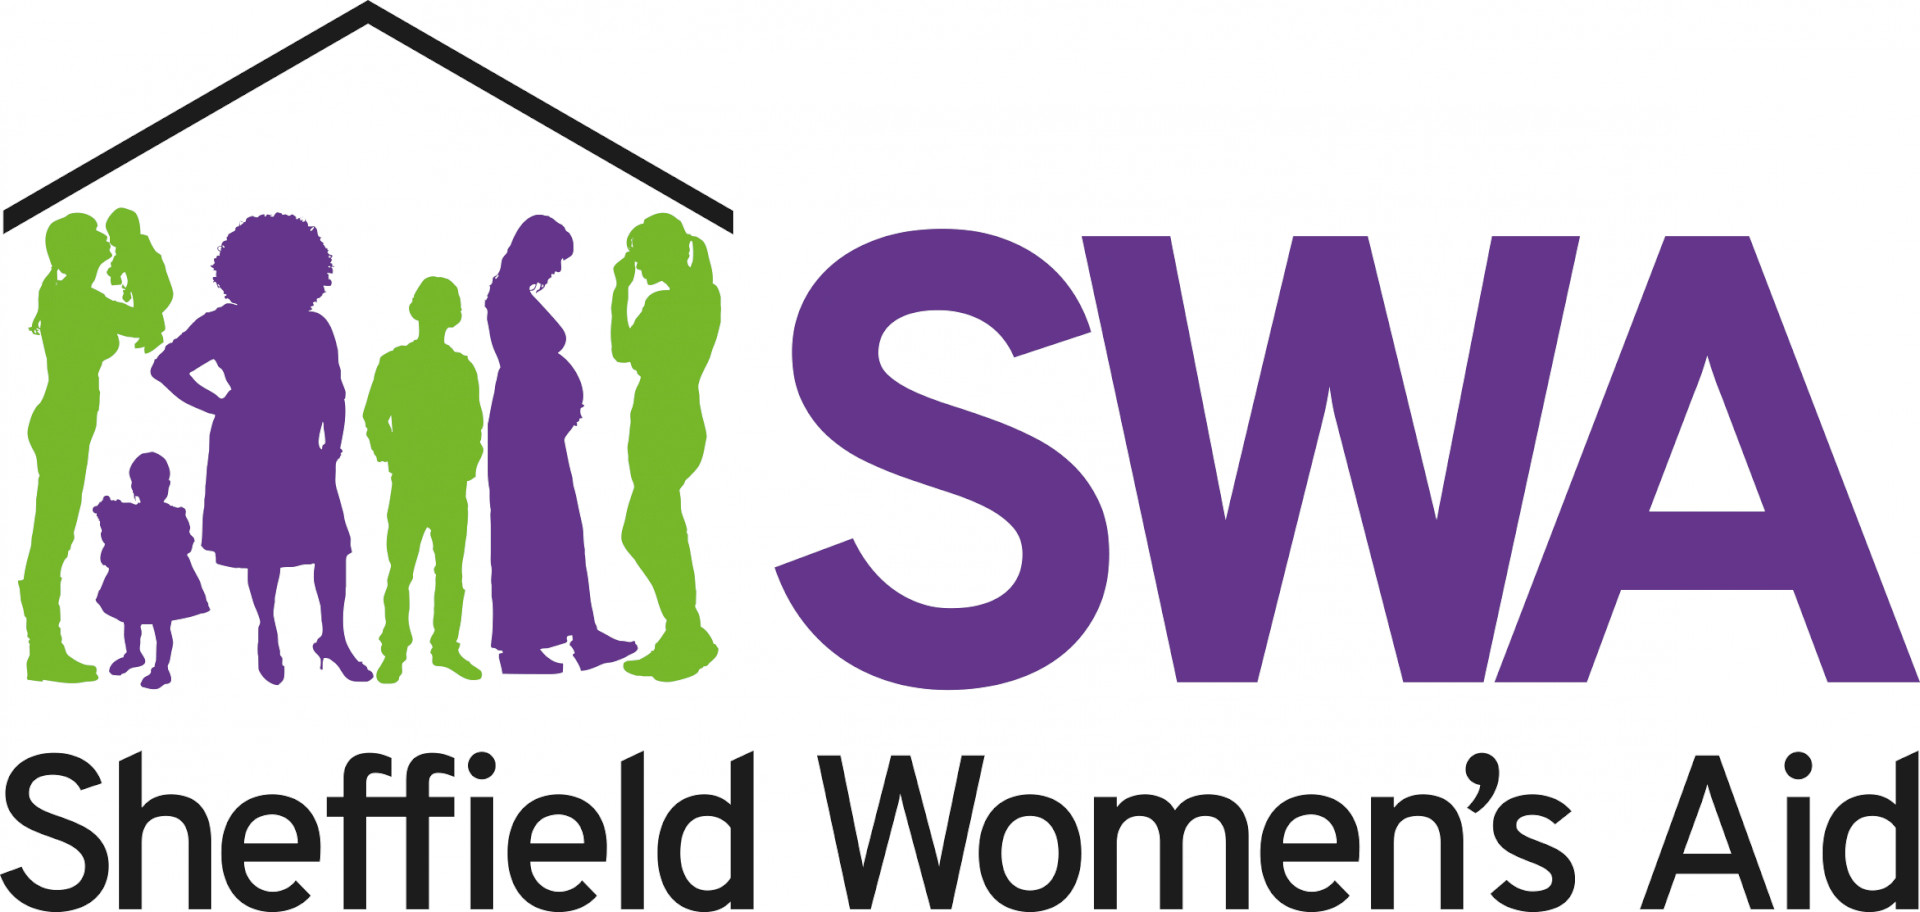 Sheffild Women's Aid